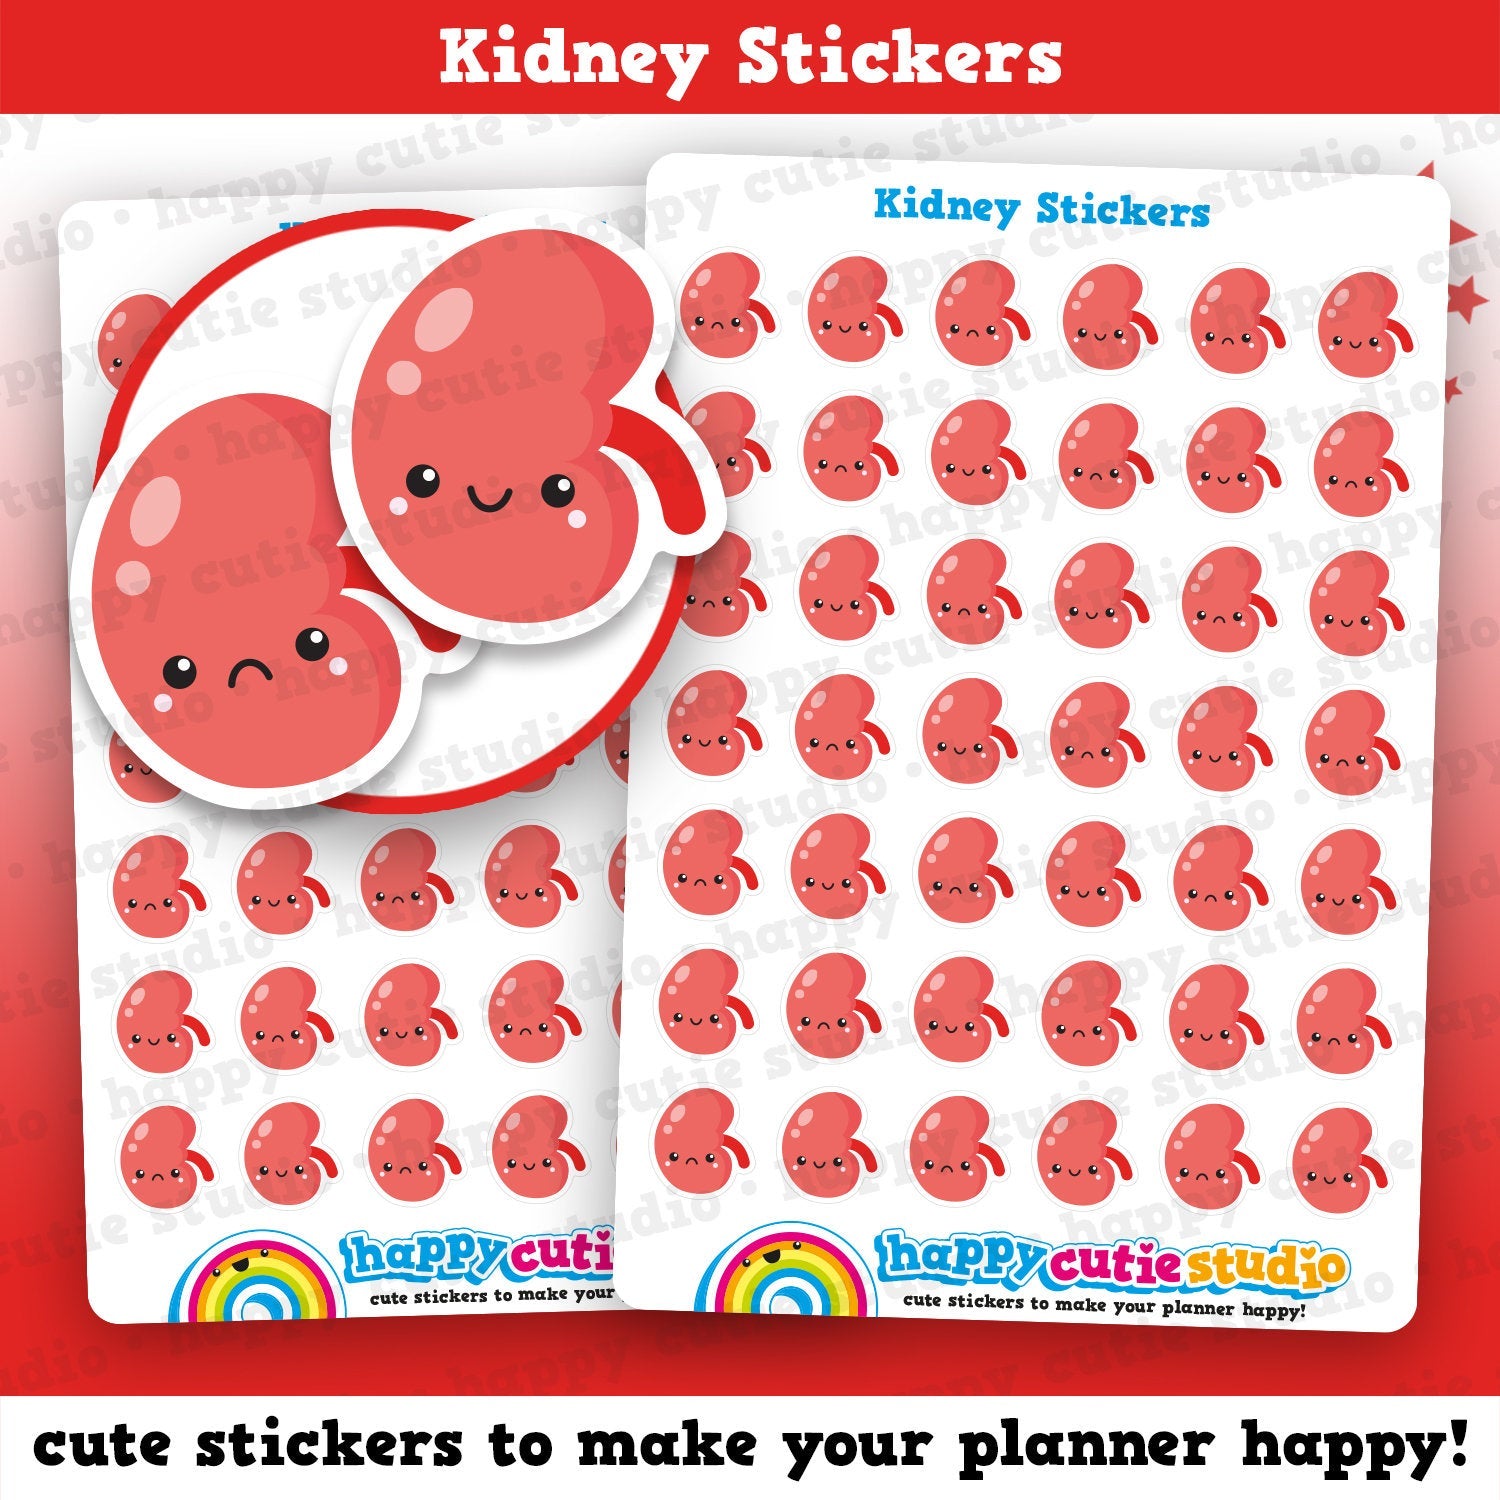 42 Cute Kidney Planner Stickers